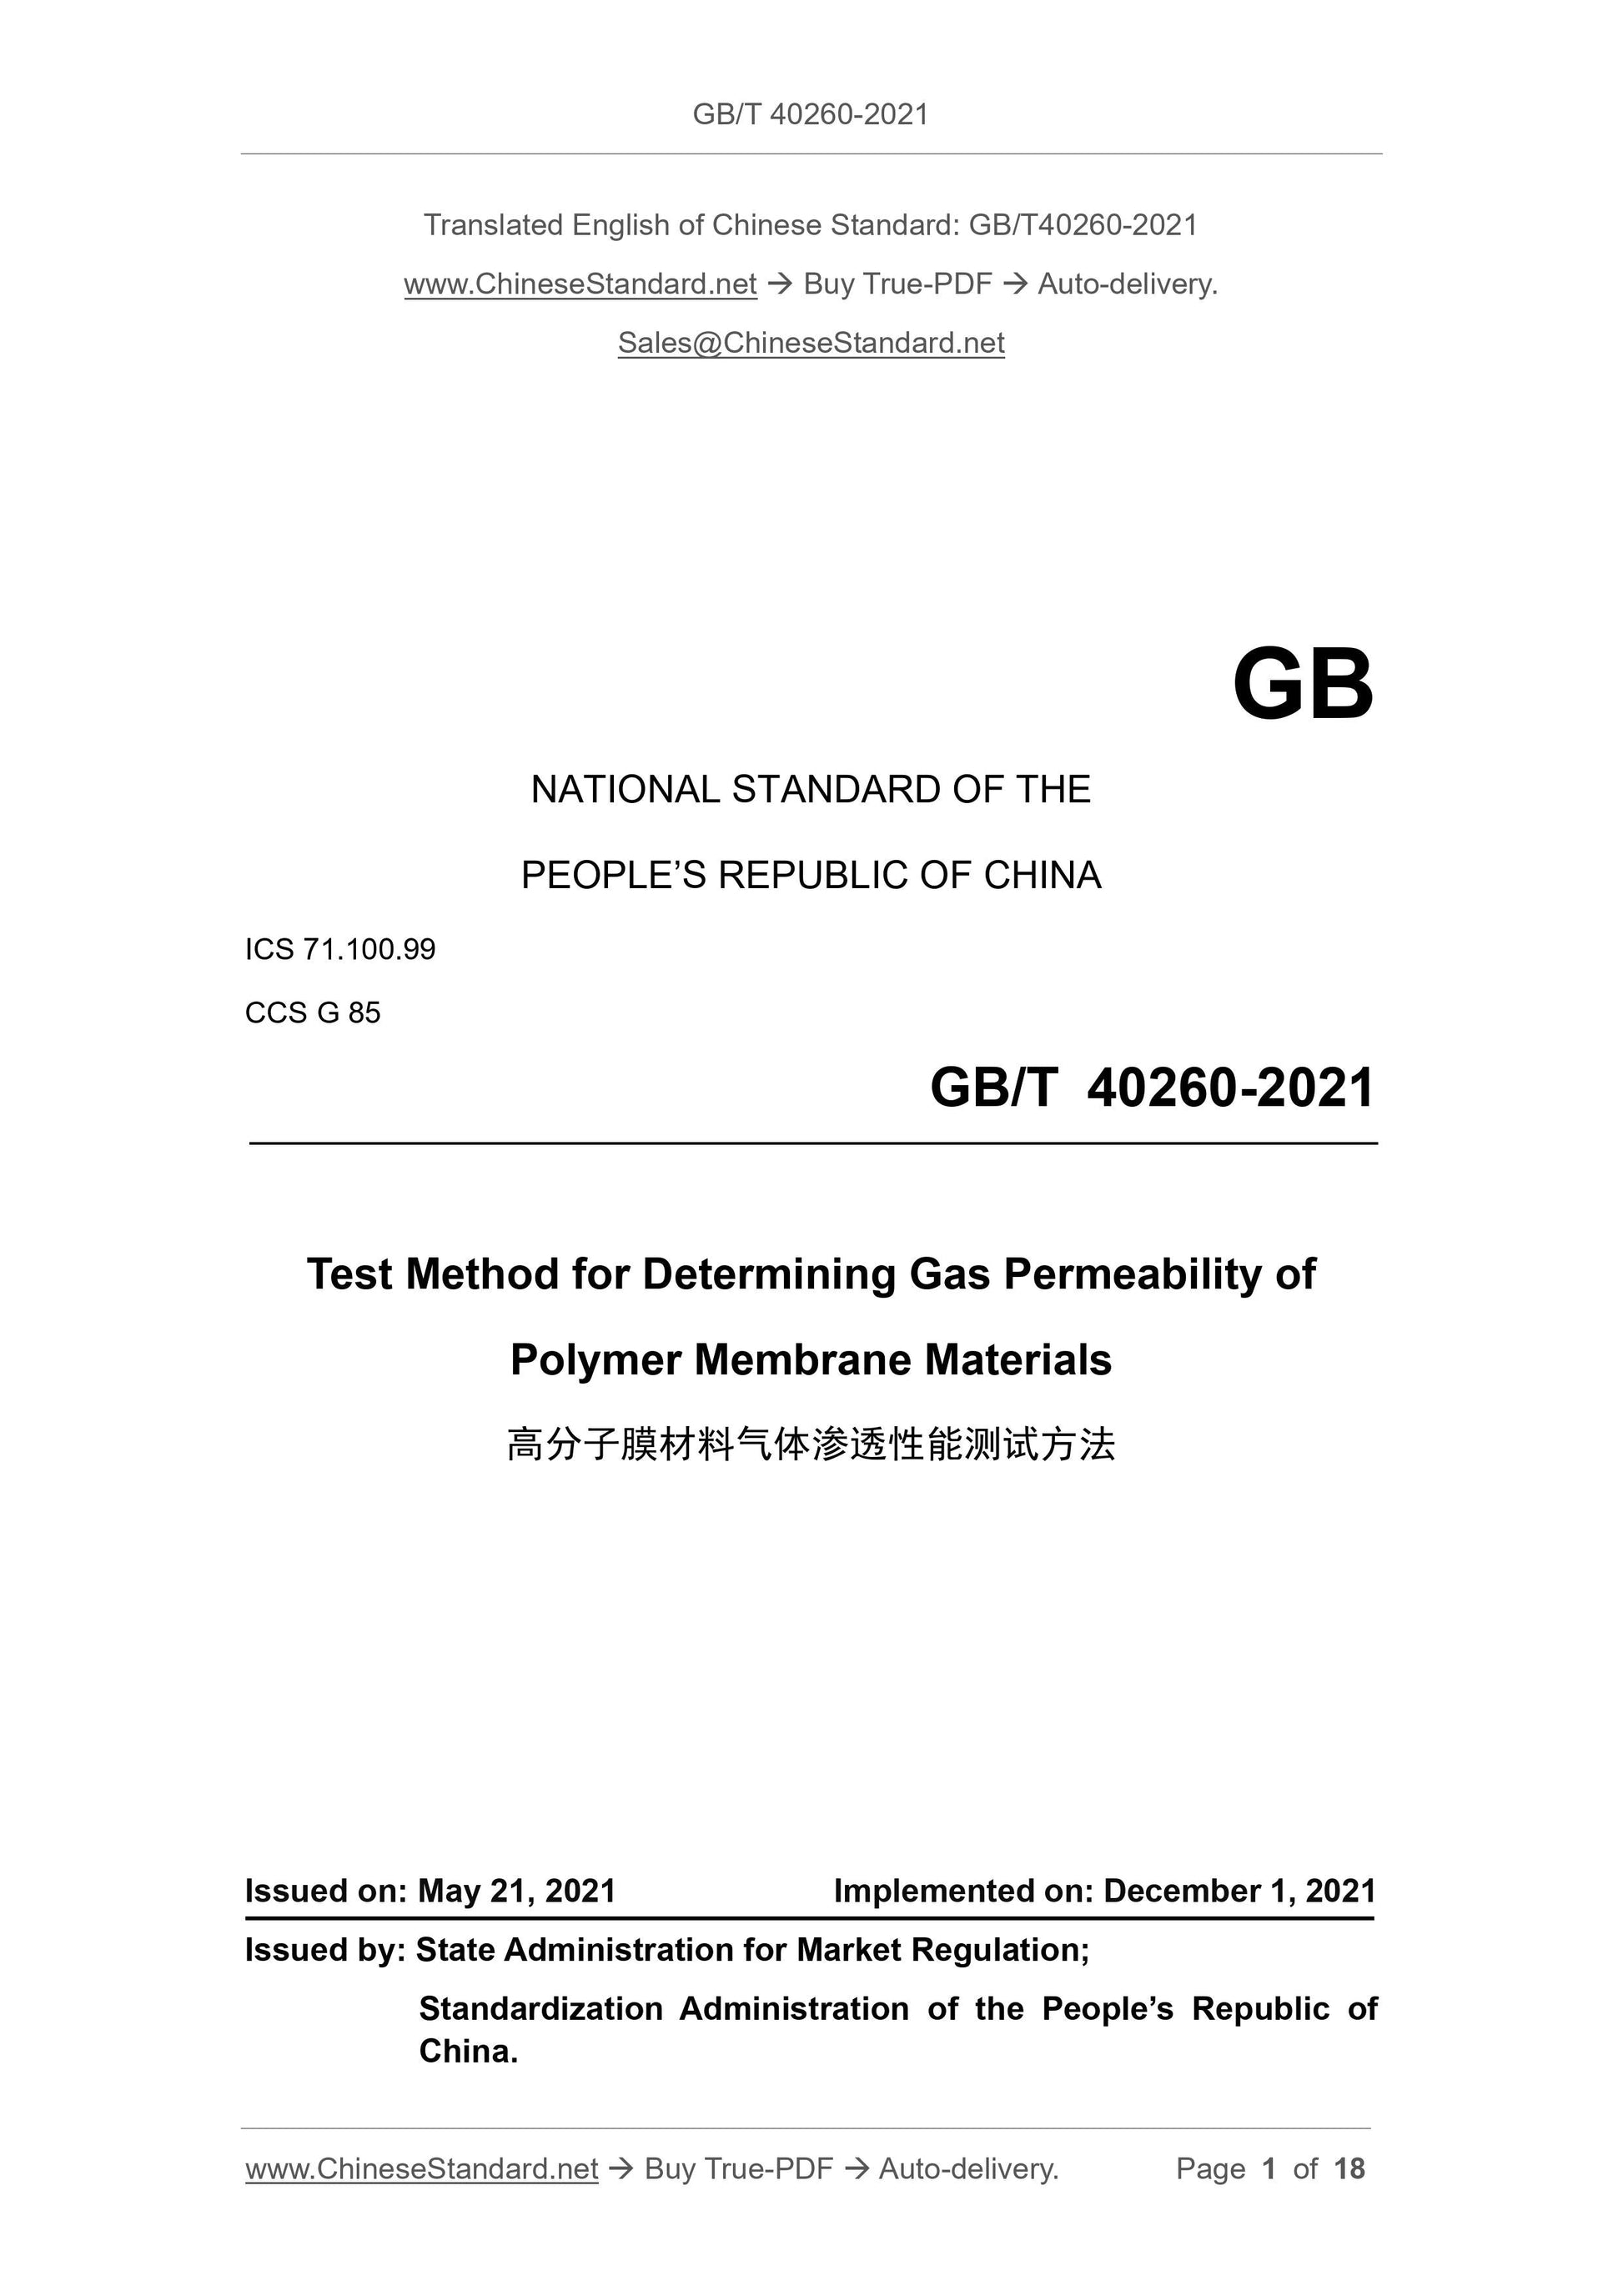 GBT40260-2021 Page 1